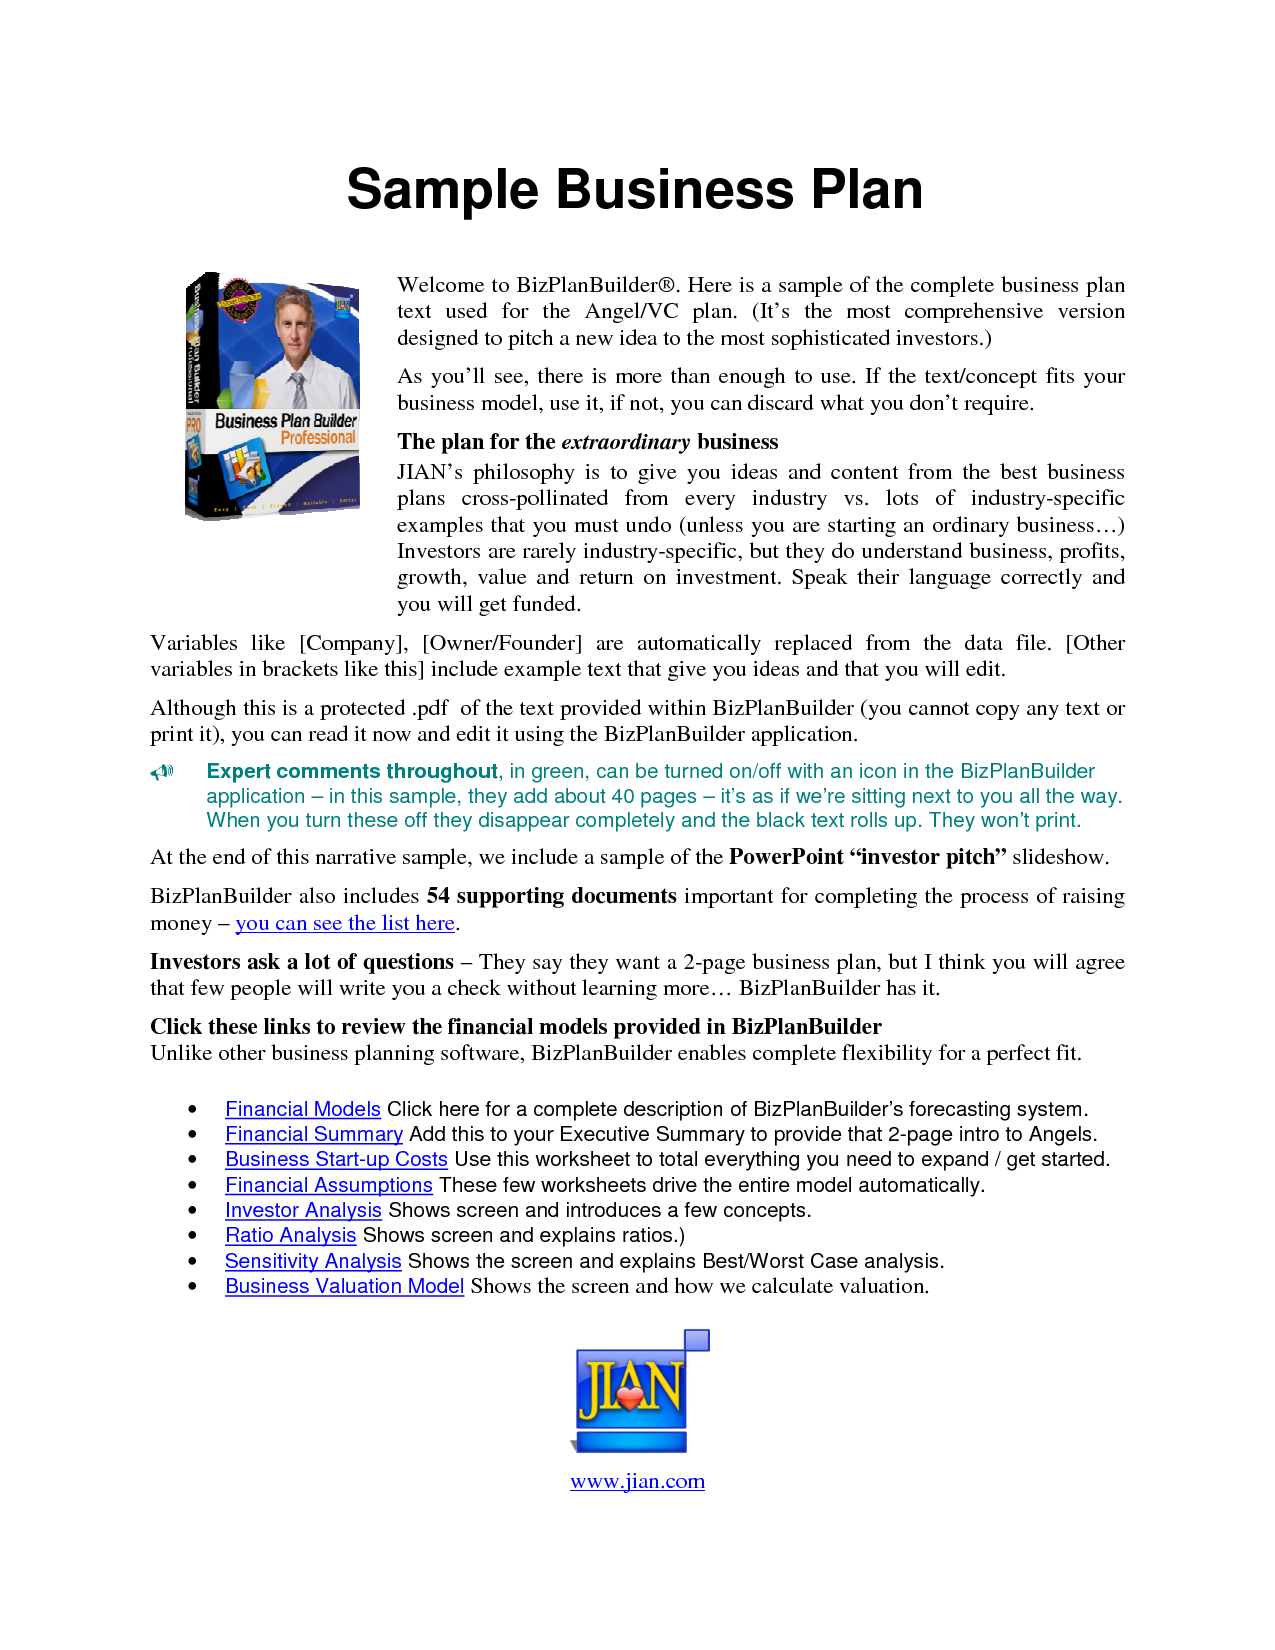 Sample Business Plan | Fotolip.com Rich image and wallpaper